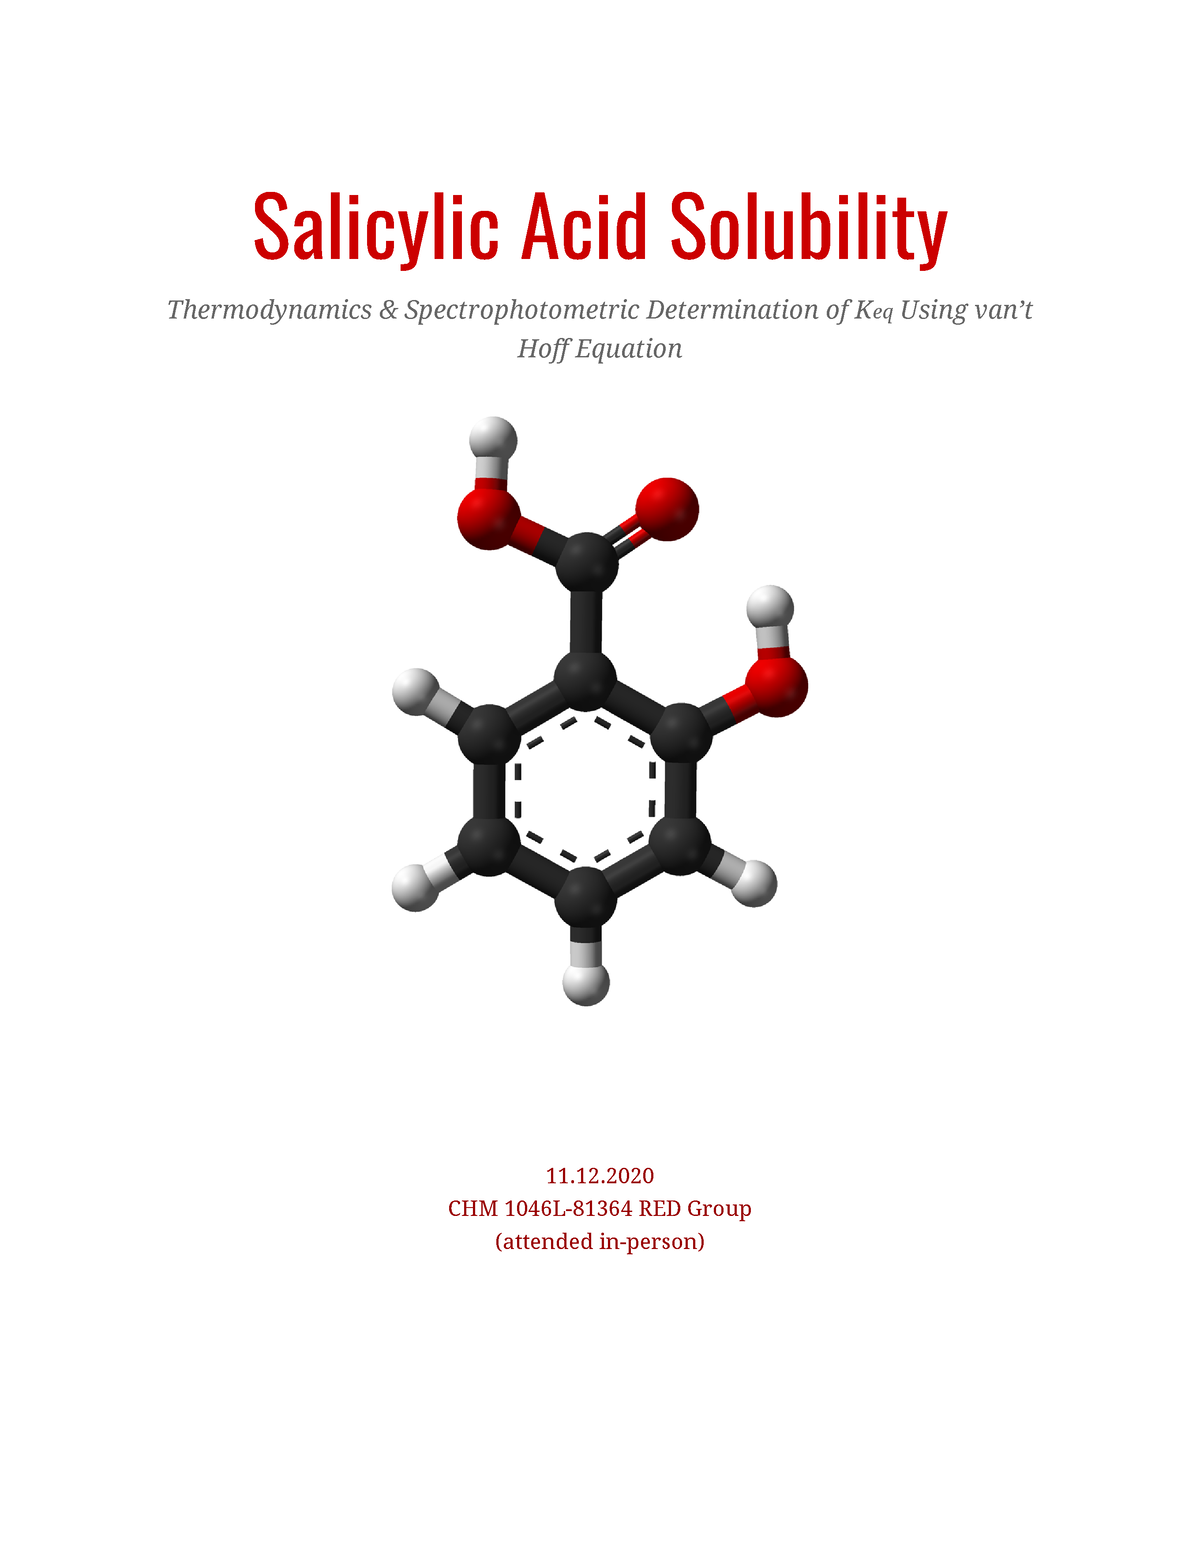 salicylic acid lewis structure